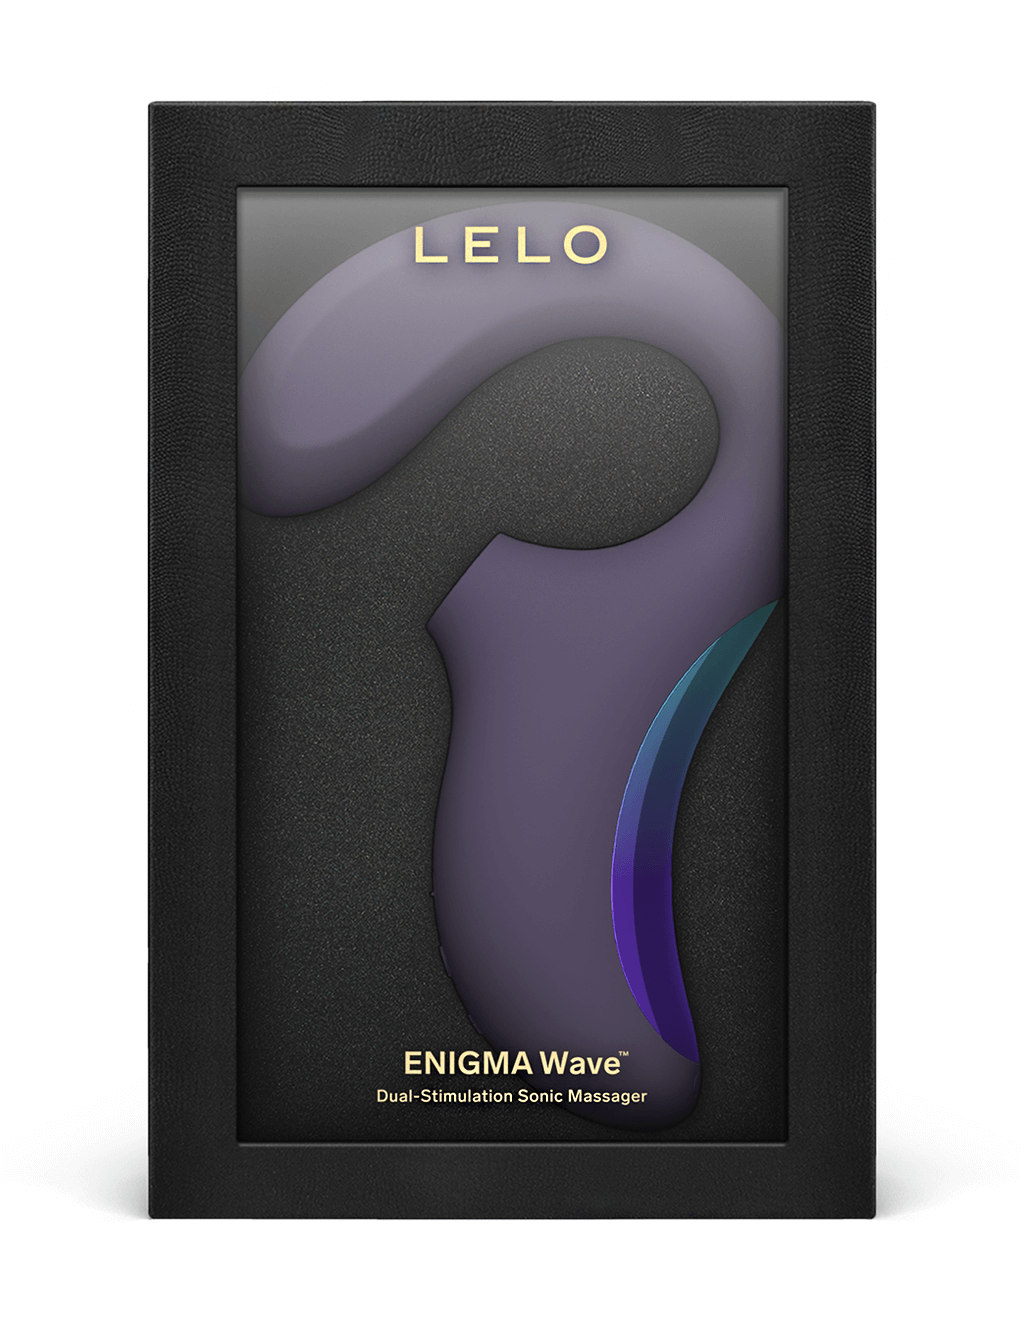 Lelo Enigma Wave - Cyber Purple - Box Front w/Product